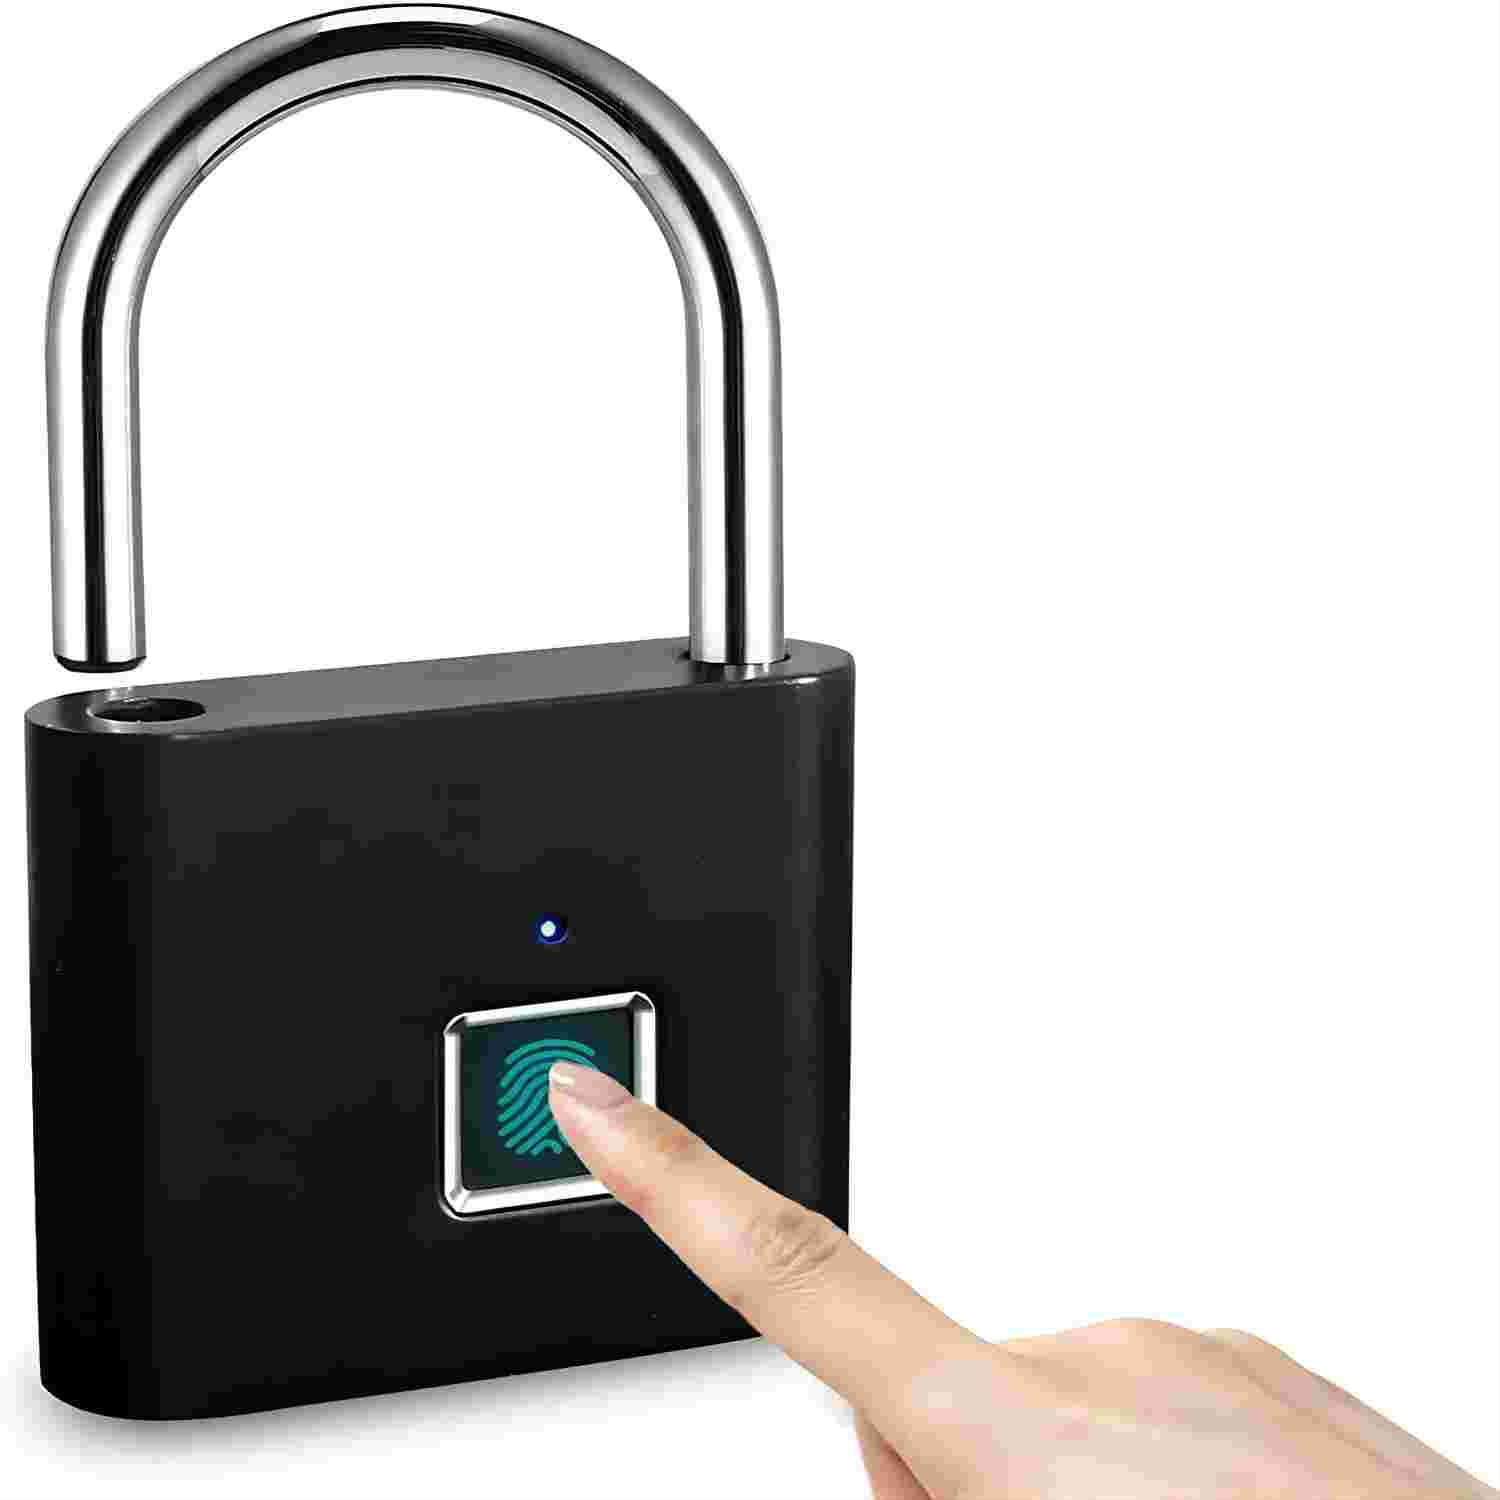 Home CCU  Combination lock with key override, Combination lock with master  key, Key Override Combination Locks, Code Retrievable Combination Locks,  Metal Combination Locks